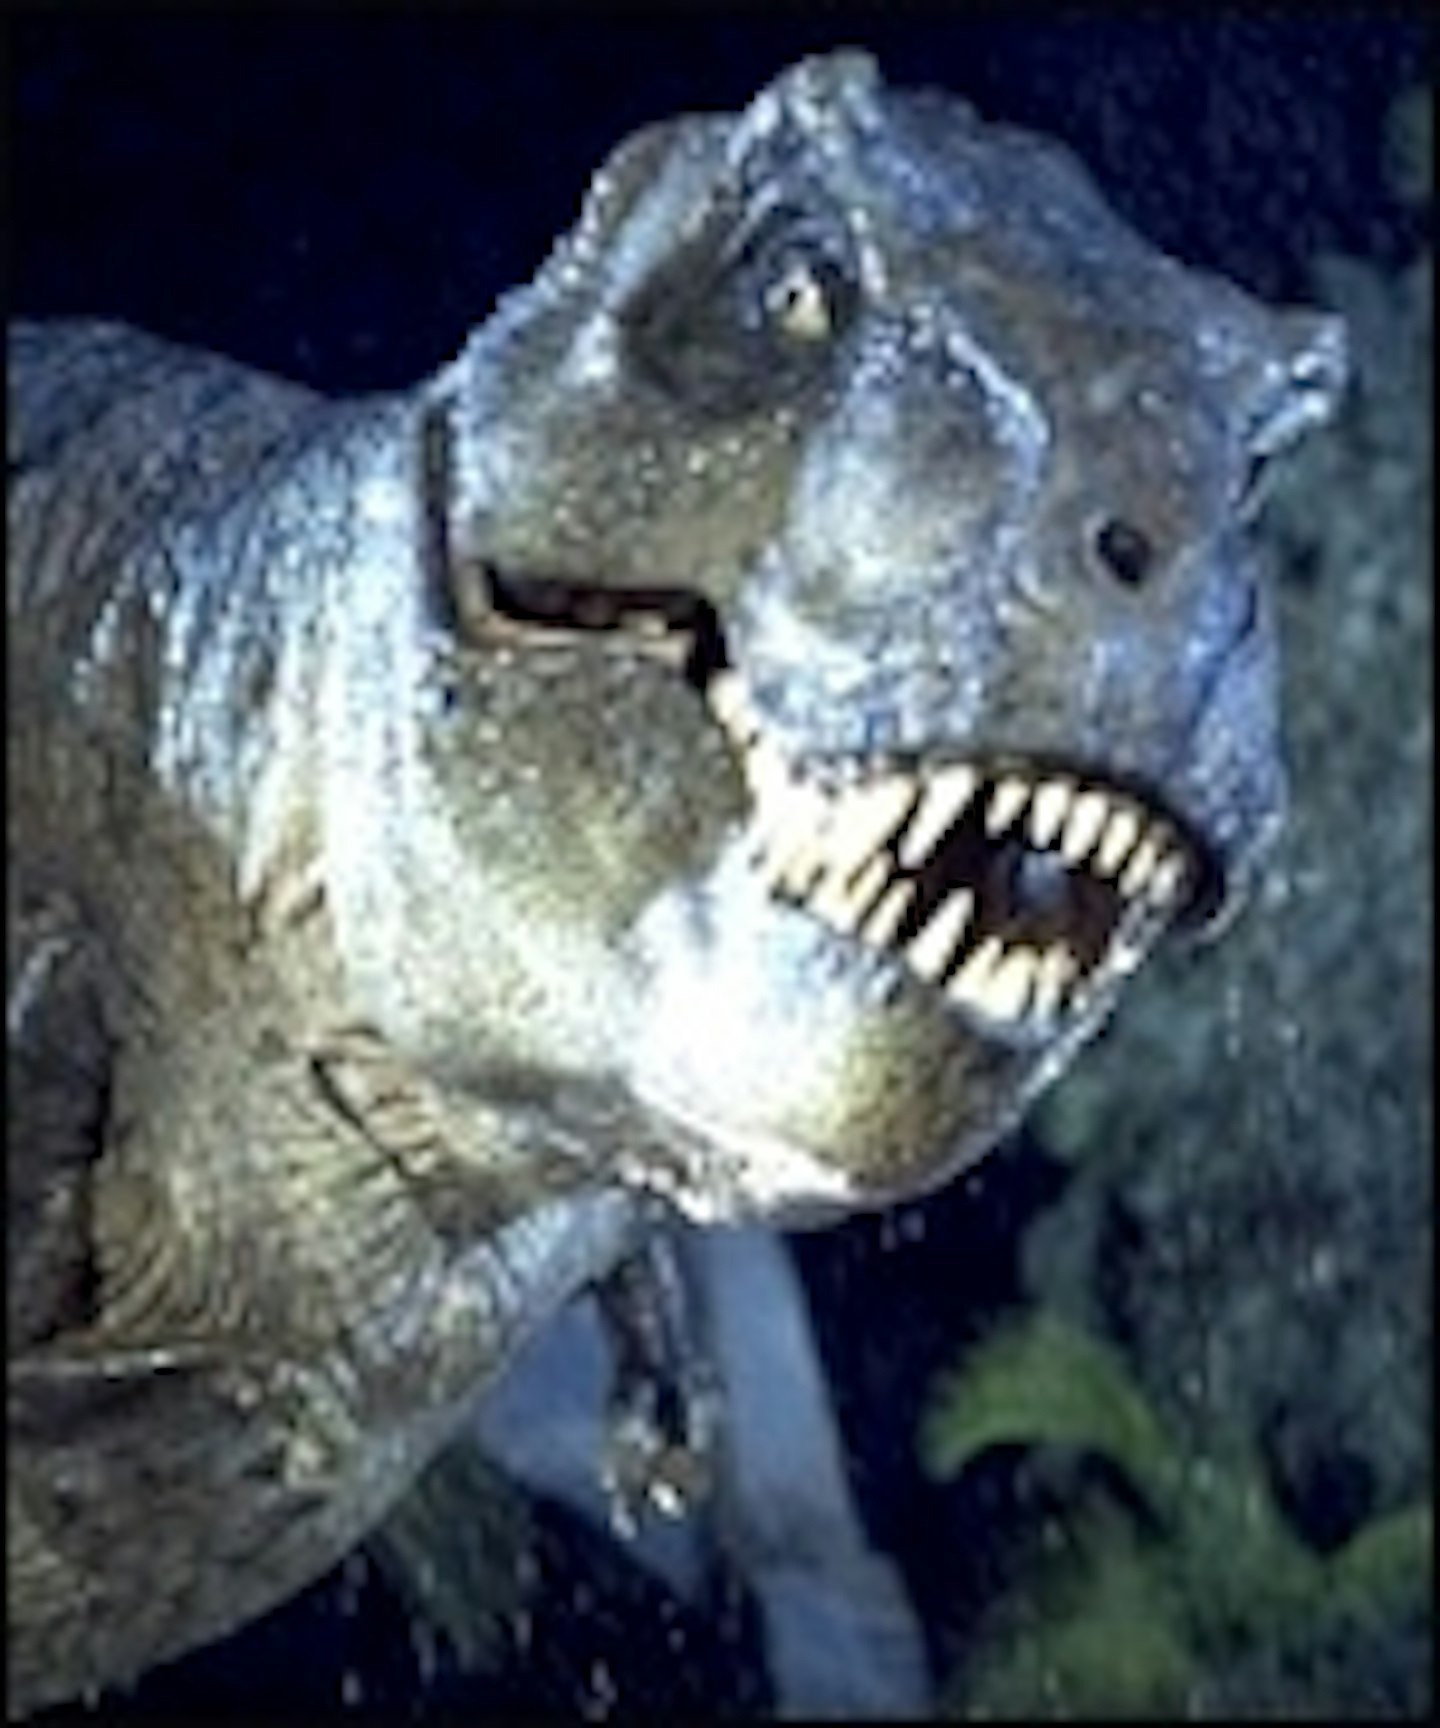 Spielberg Spitballing New Jurassic Park